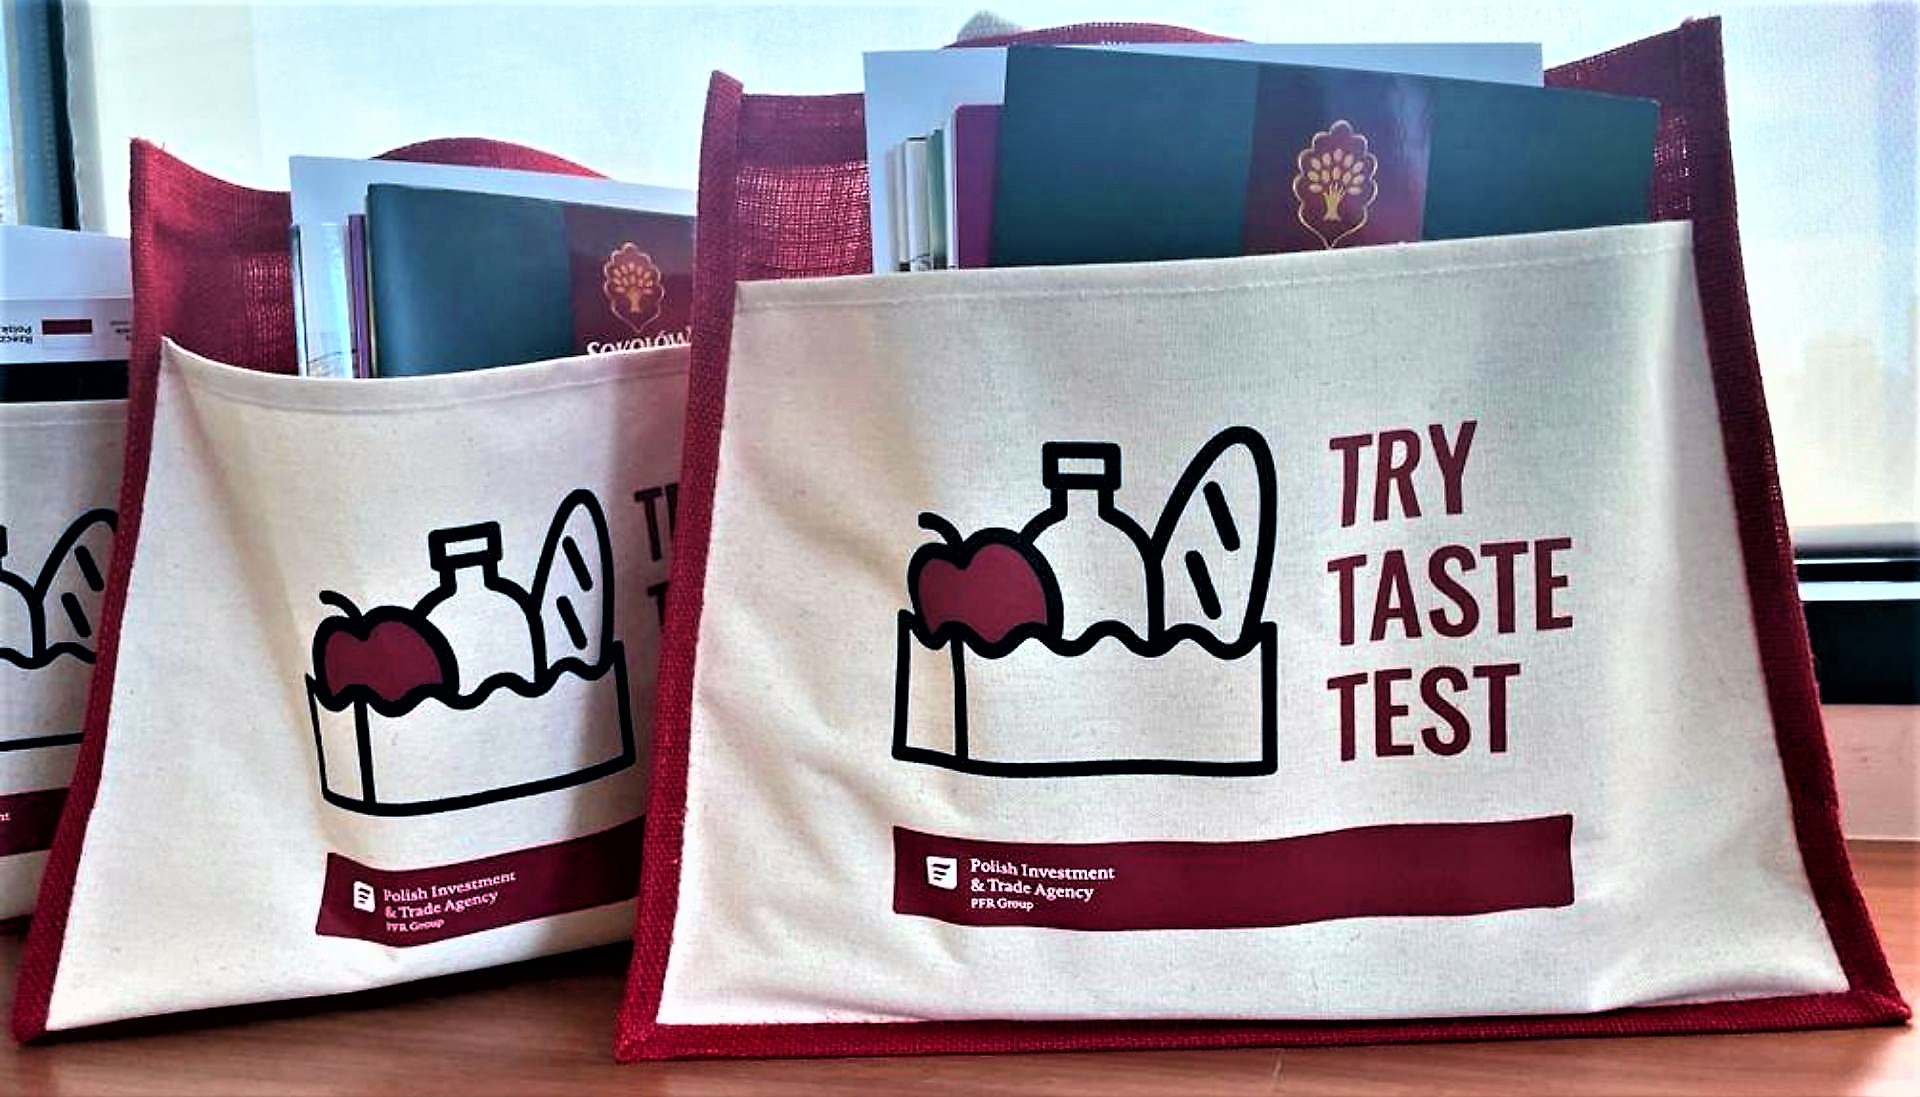 TRY TEST TASTE project | polandshiok.sg